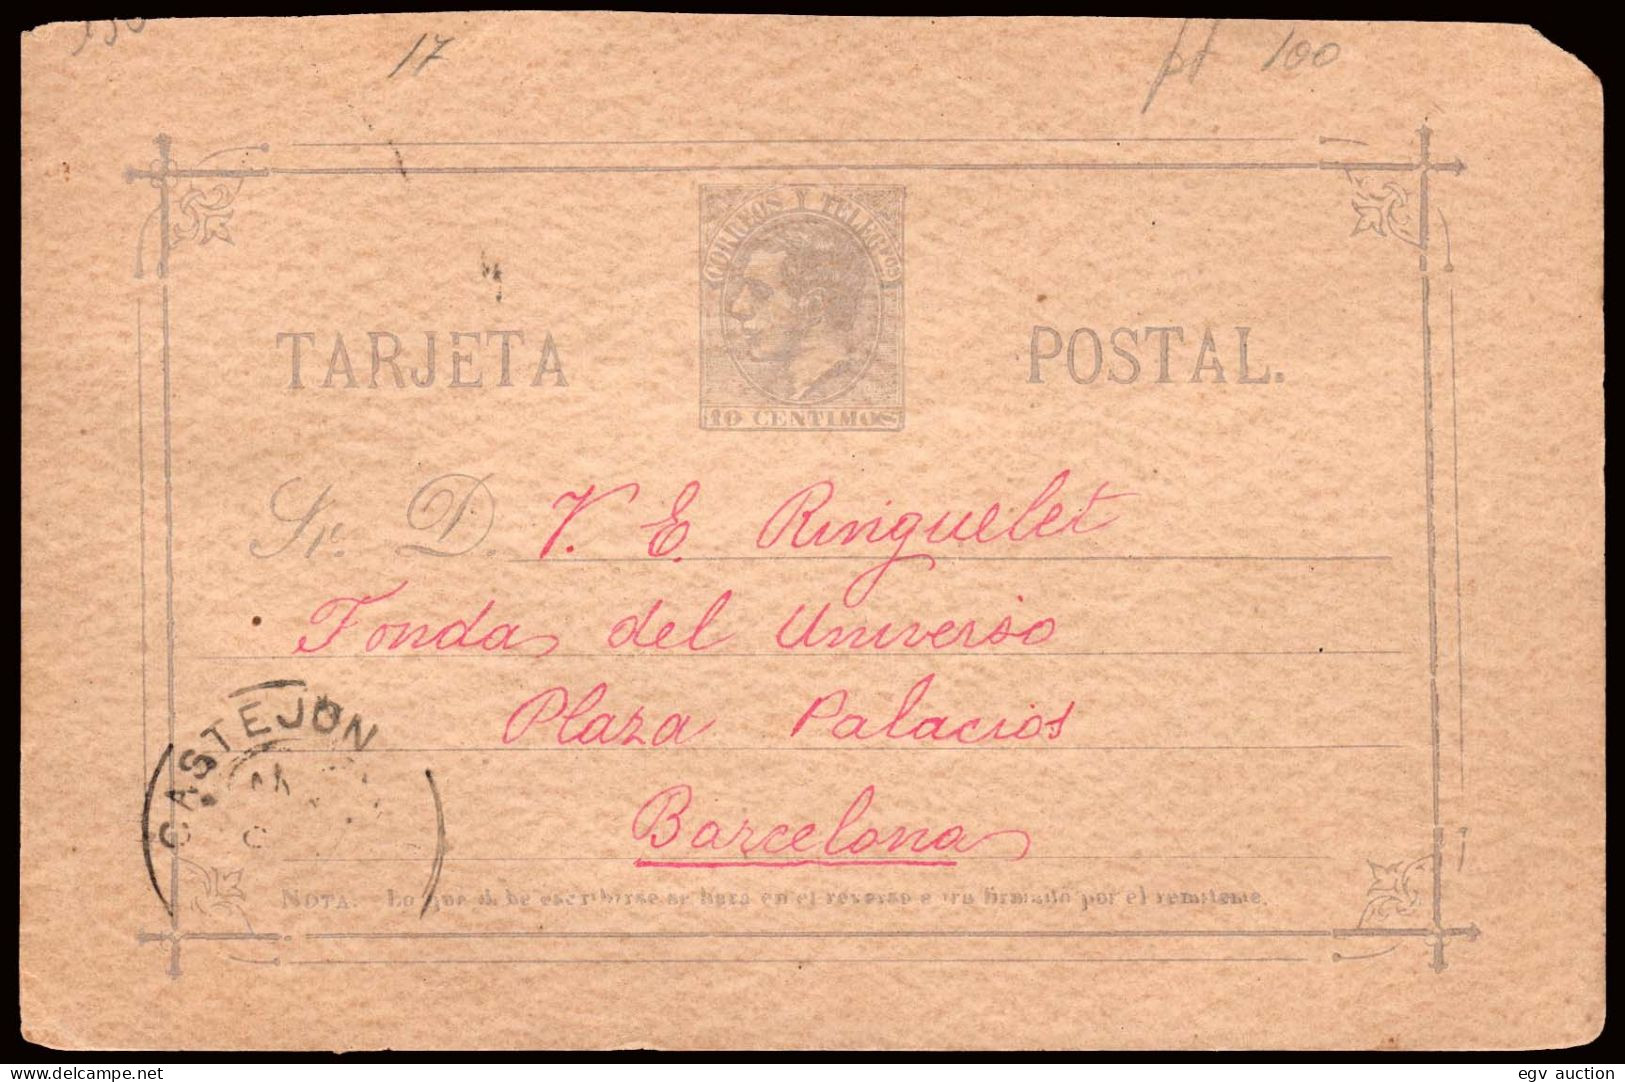 Navarra - Edi O EP 11 - Entero Postal Mat Trébol "Castejón" A Barcelona - 1850-1931